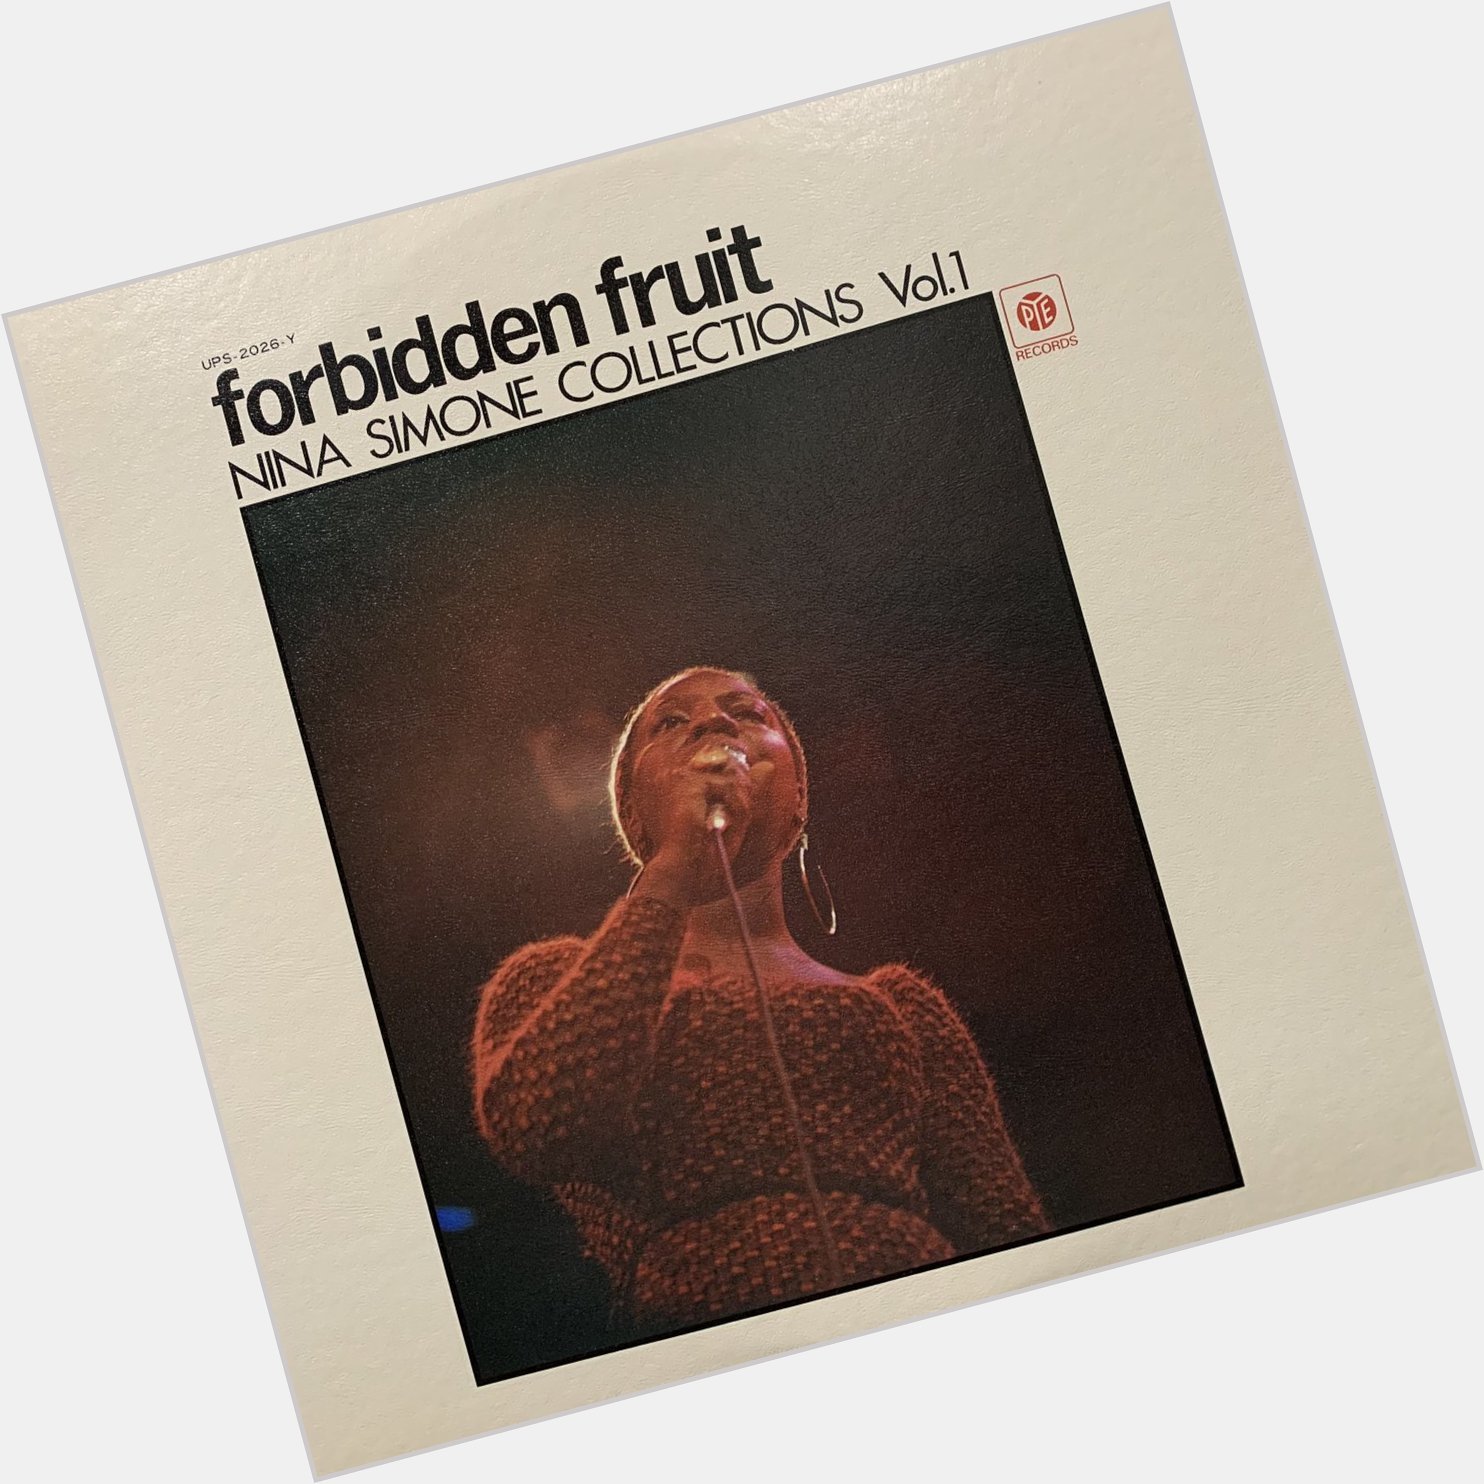 Forbidden fruit 
Nina Simone Collections Vol.1
Recorded 1961
Happy Birthday!  